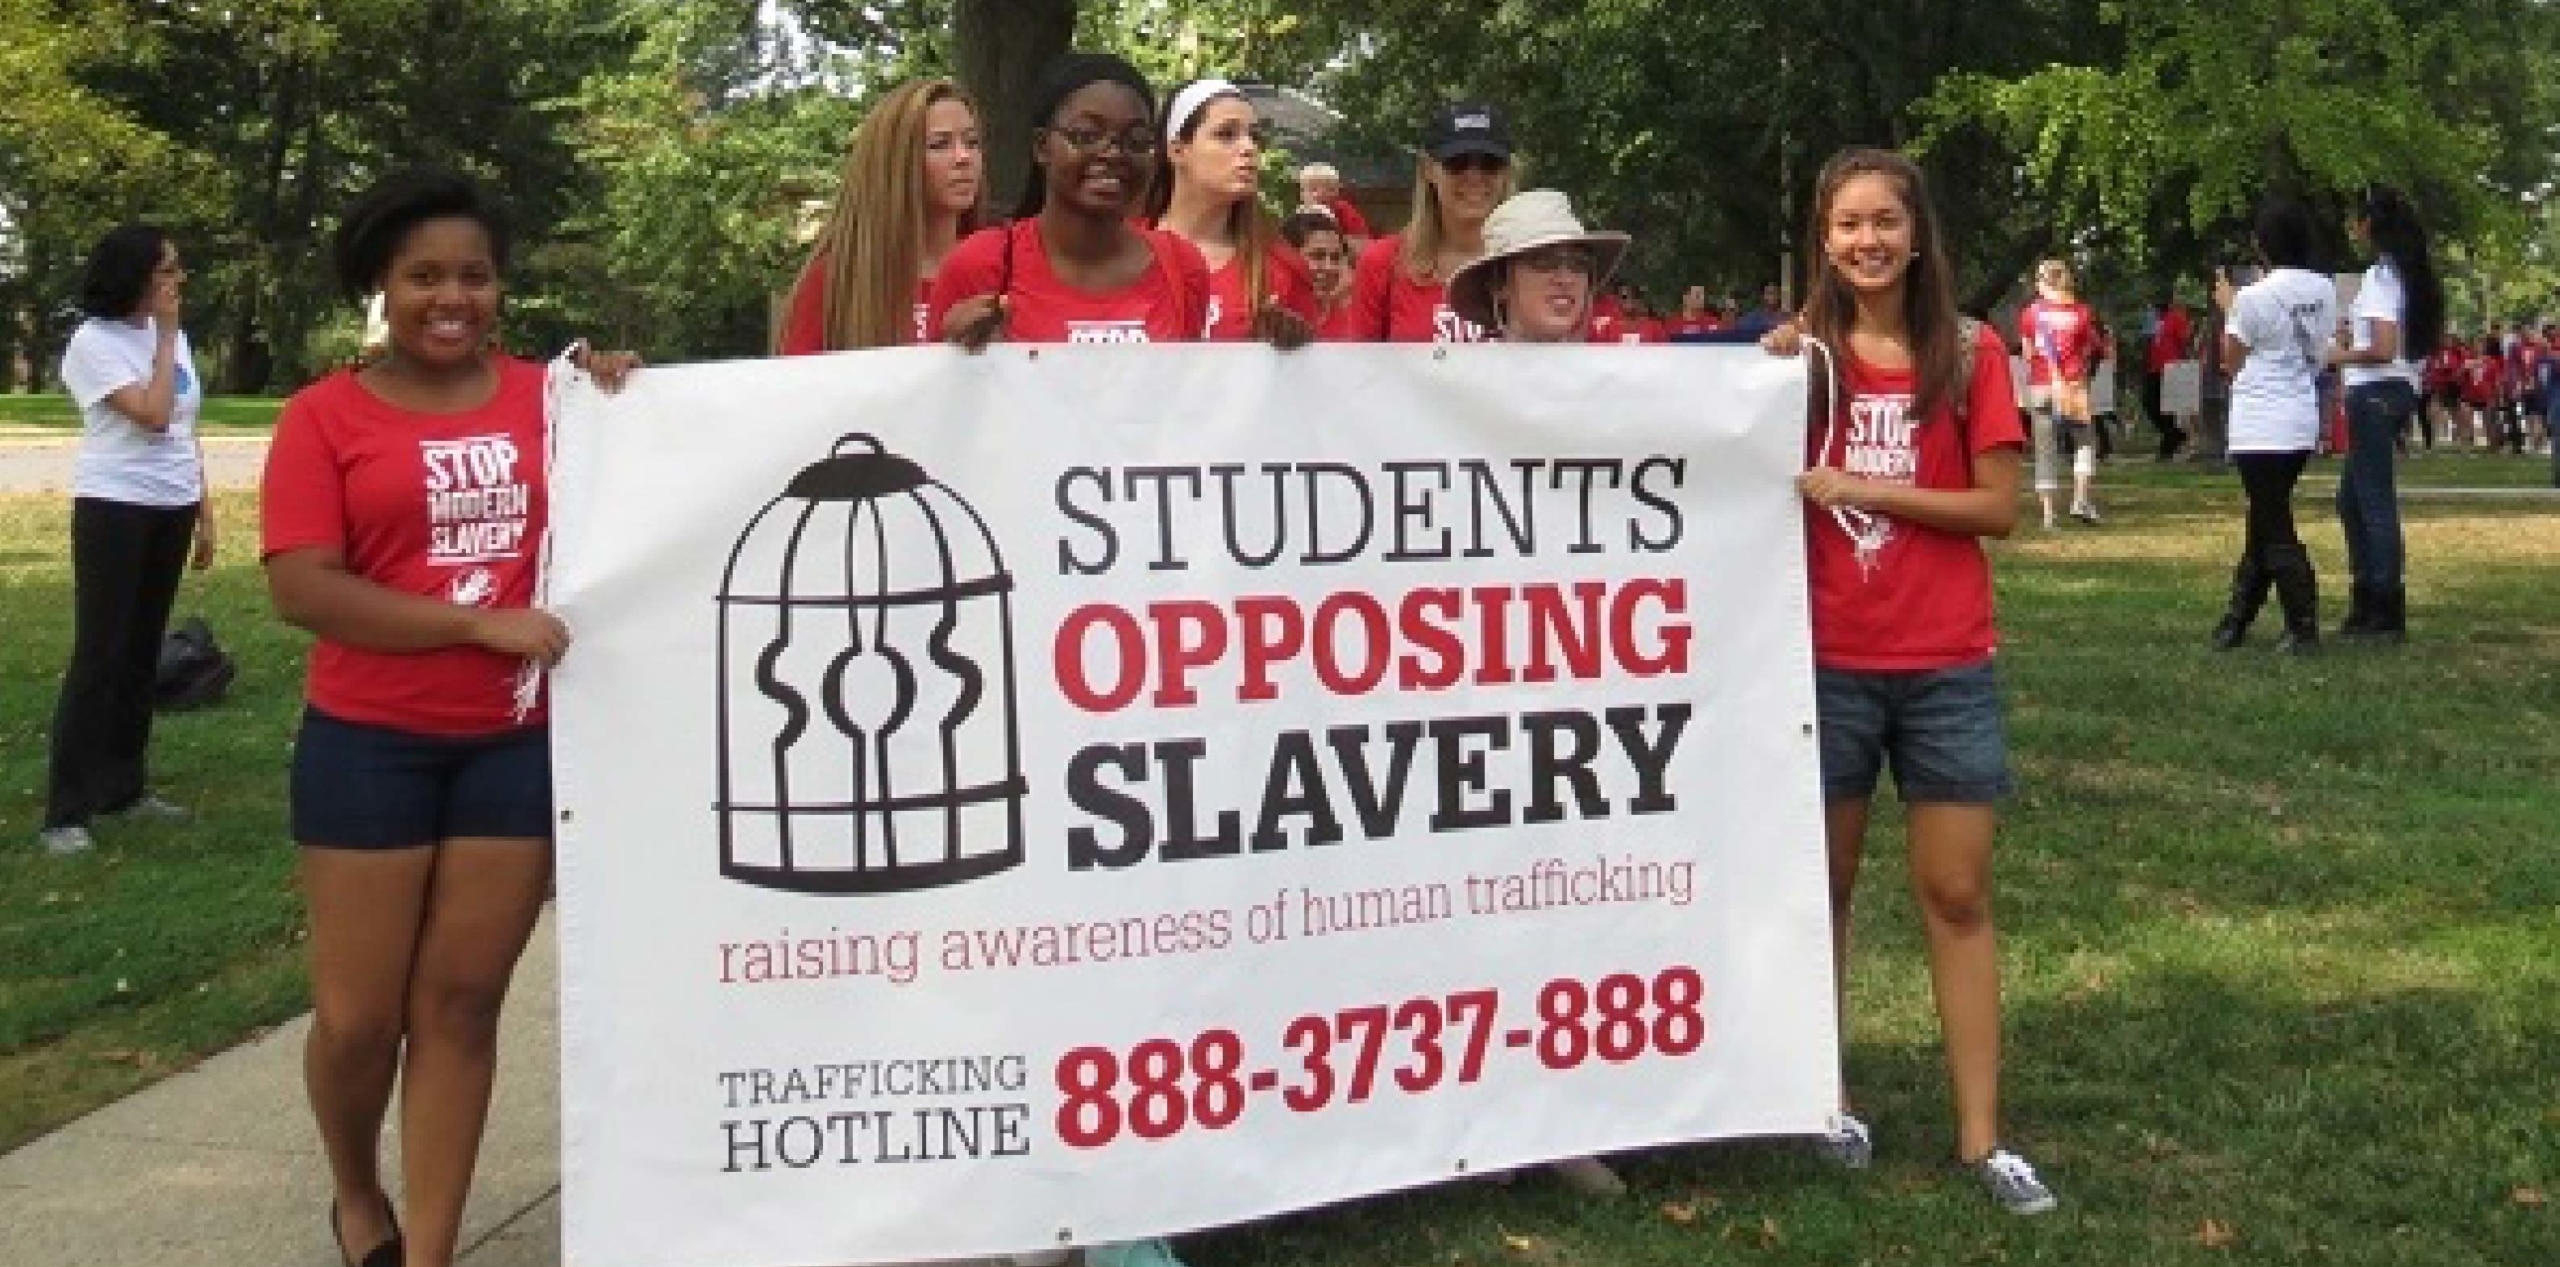 2013 Students Opposing Slavery